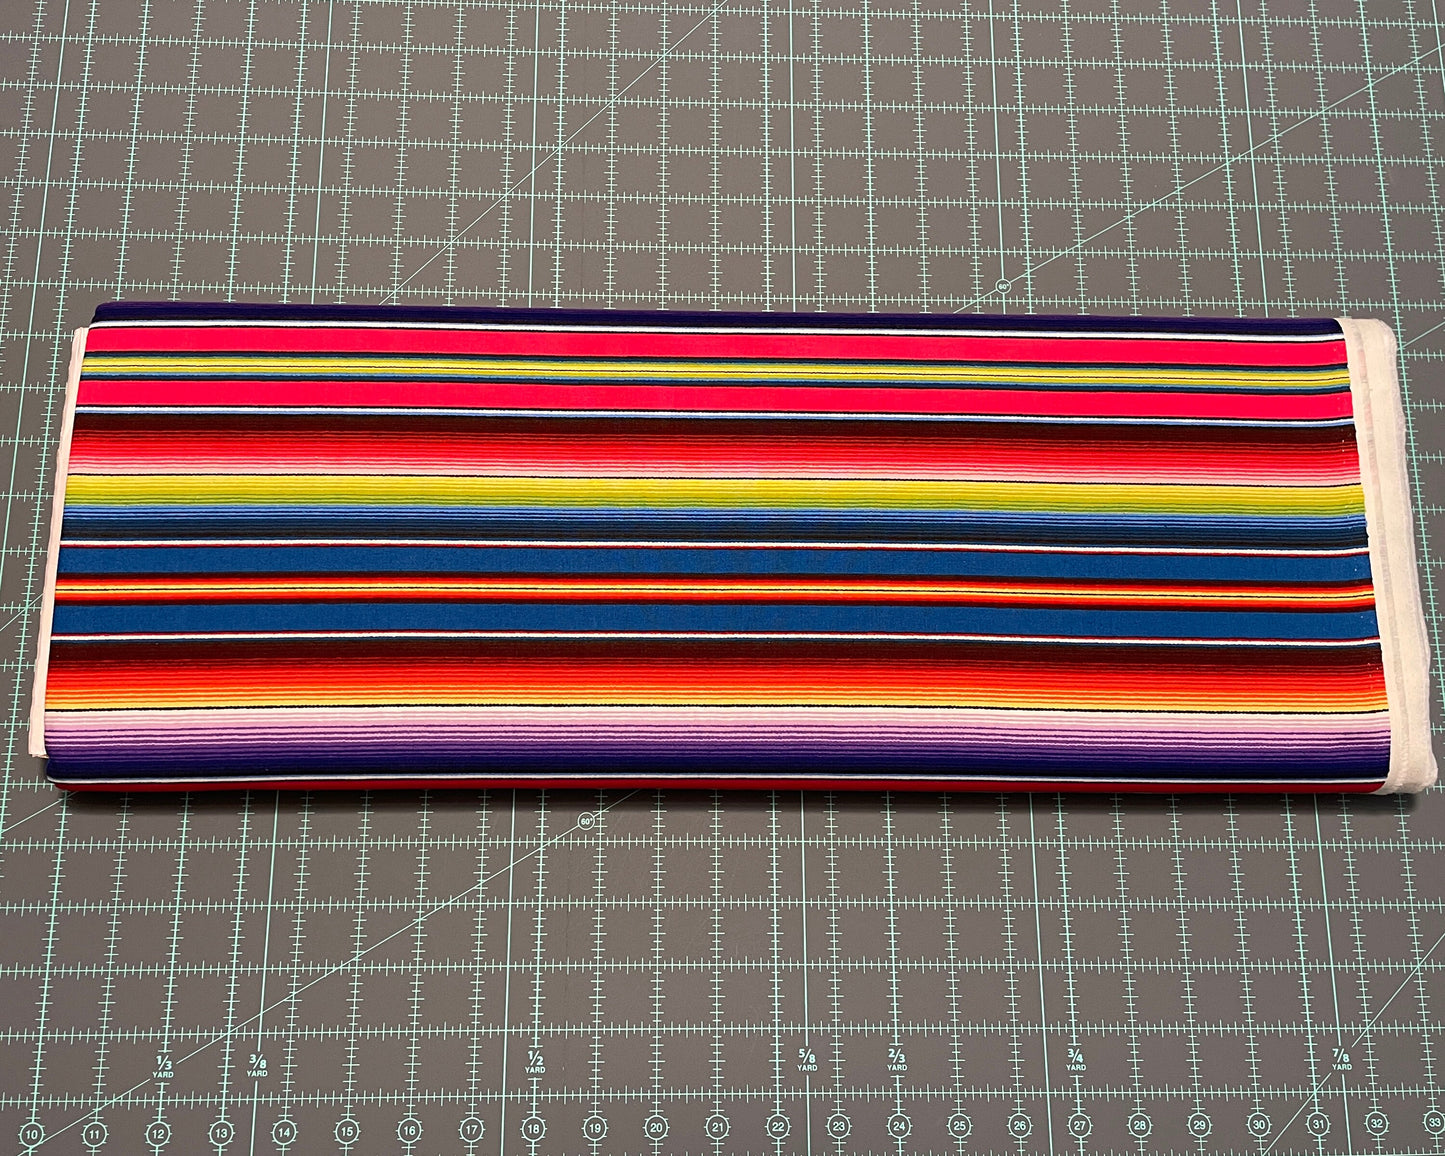 Mexican Sombrero Stripe - 100% Cotton Fabric - Elizabeth's Studio - Multicolor Mexican Blanket stripe Material for sewing - Ships NEXT DAY